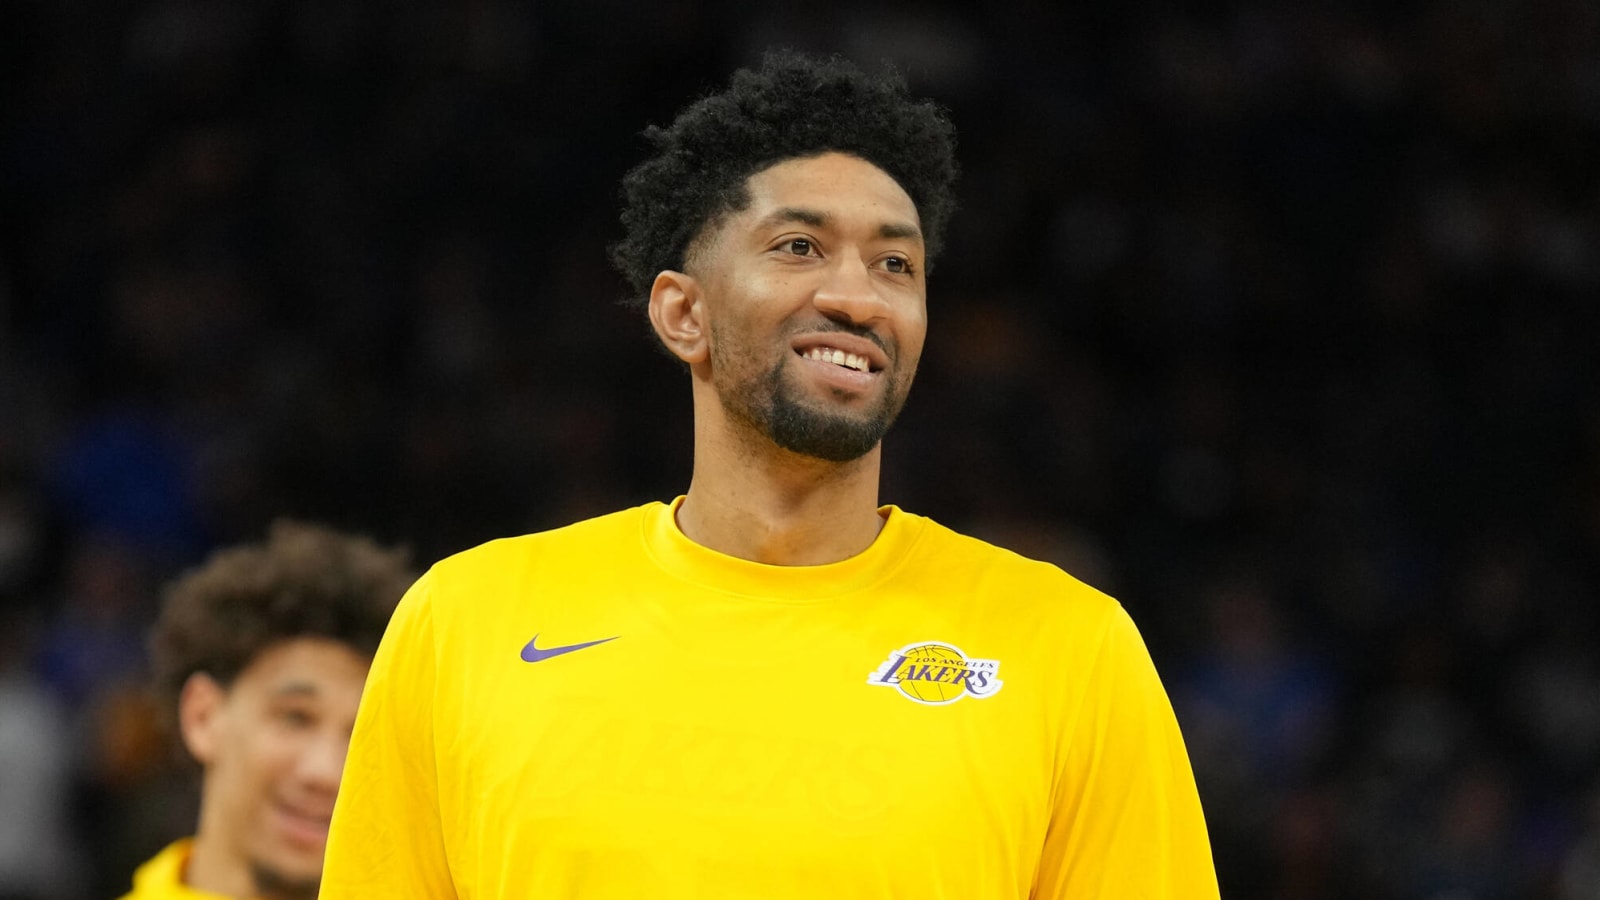 Lakers forward to undergo arthroscopic surgery on left knee